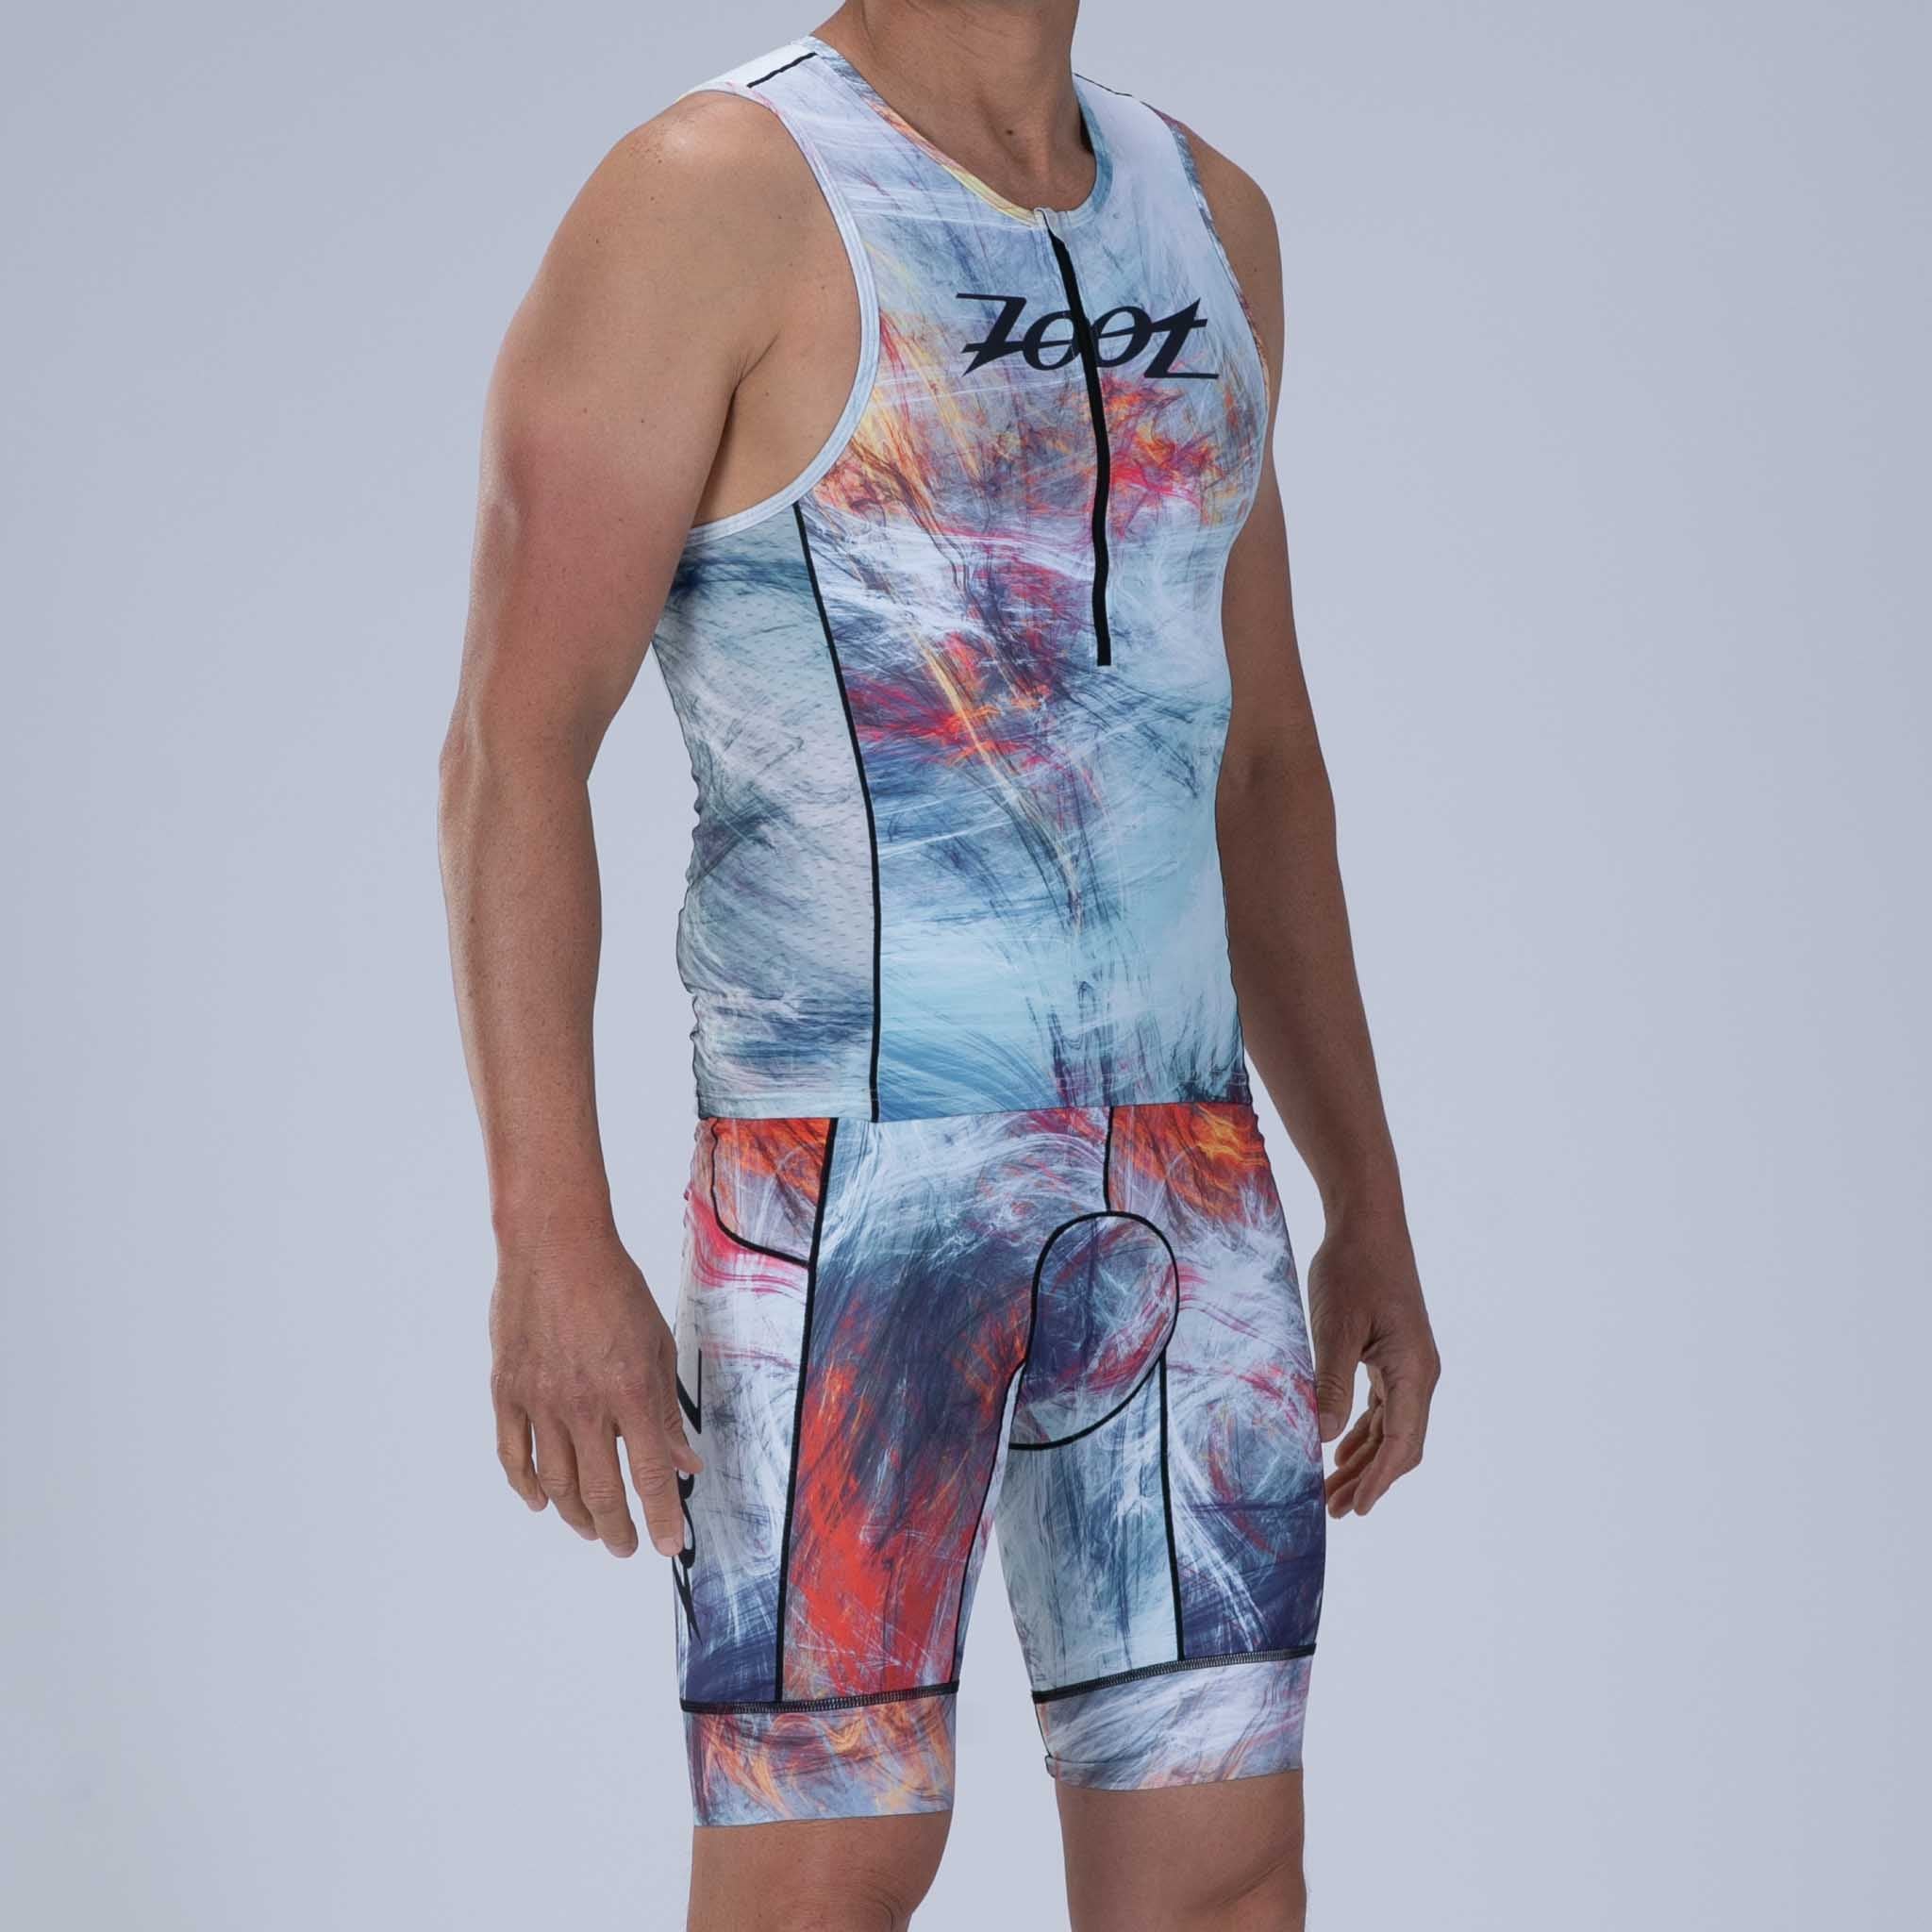 Zoot Sports TRI SHORTS Mens LTD Triathlon 9 Inch Short - Energy